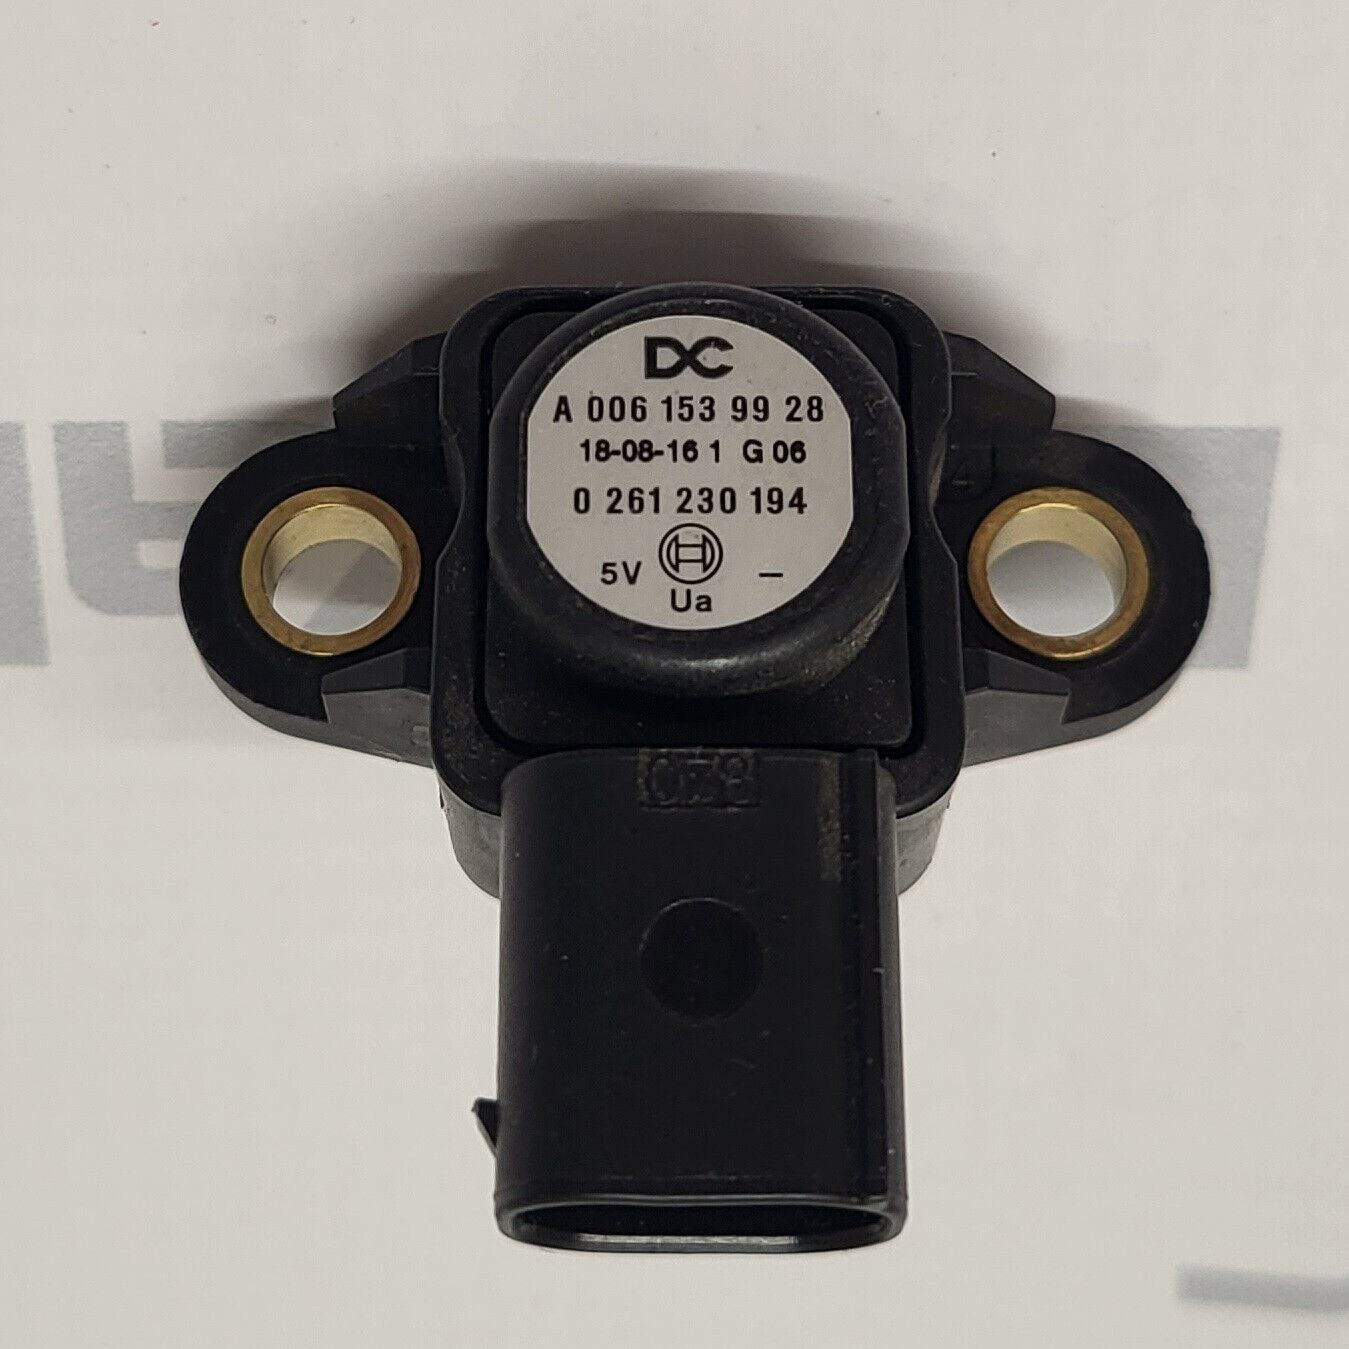 BOSCH Intake Manifold Pressure Sensor For SMART, Fortwo, A0061539928, 0261230194